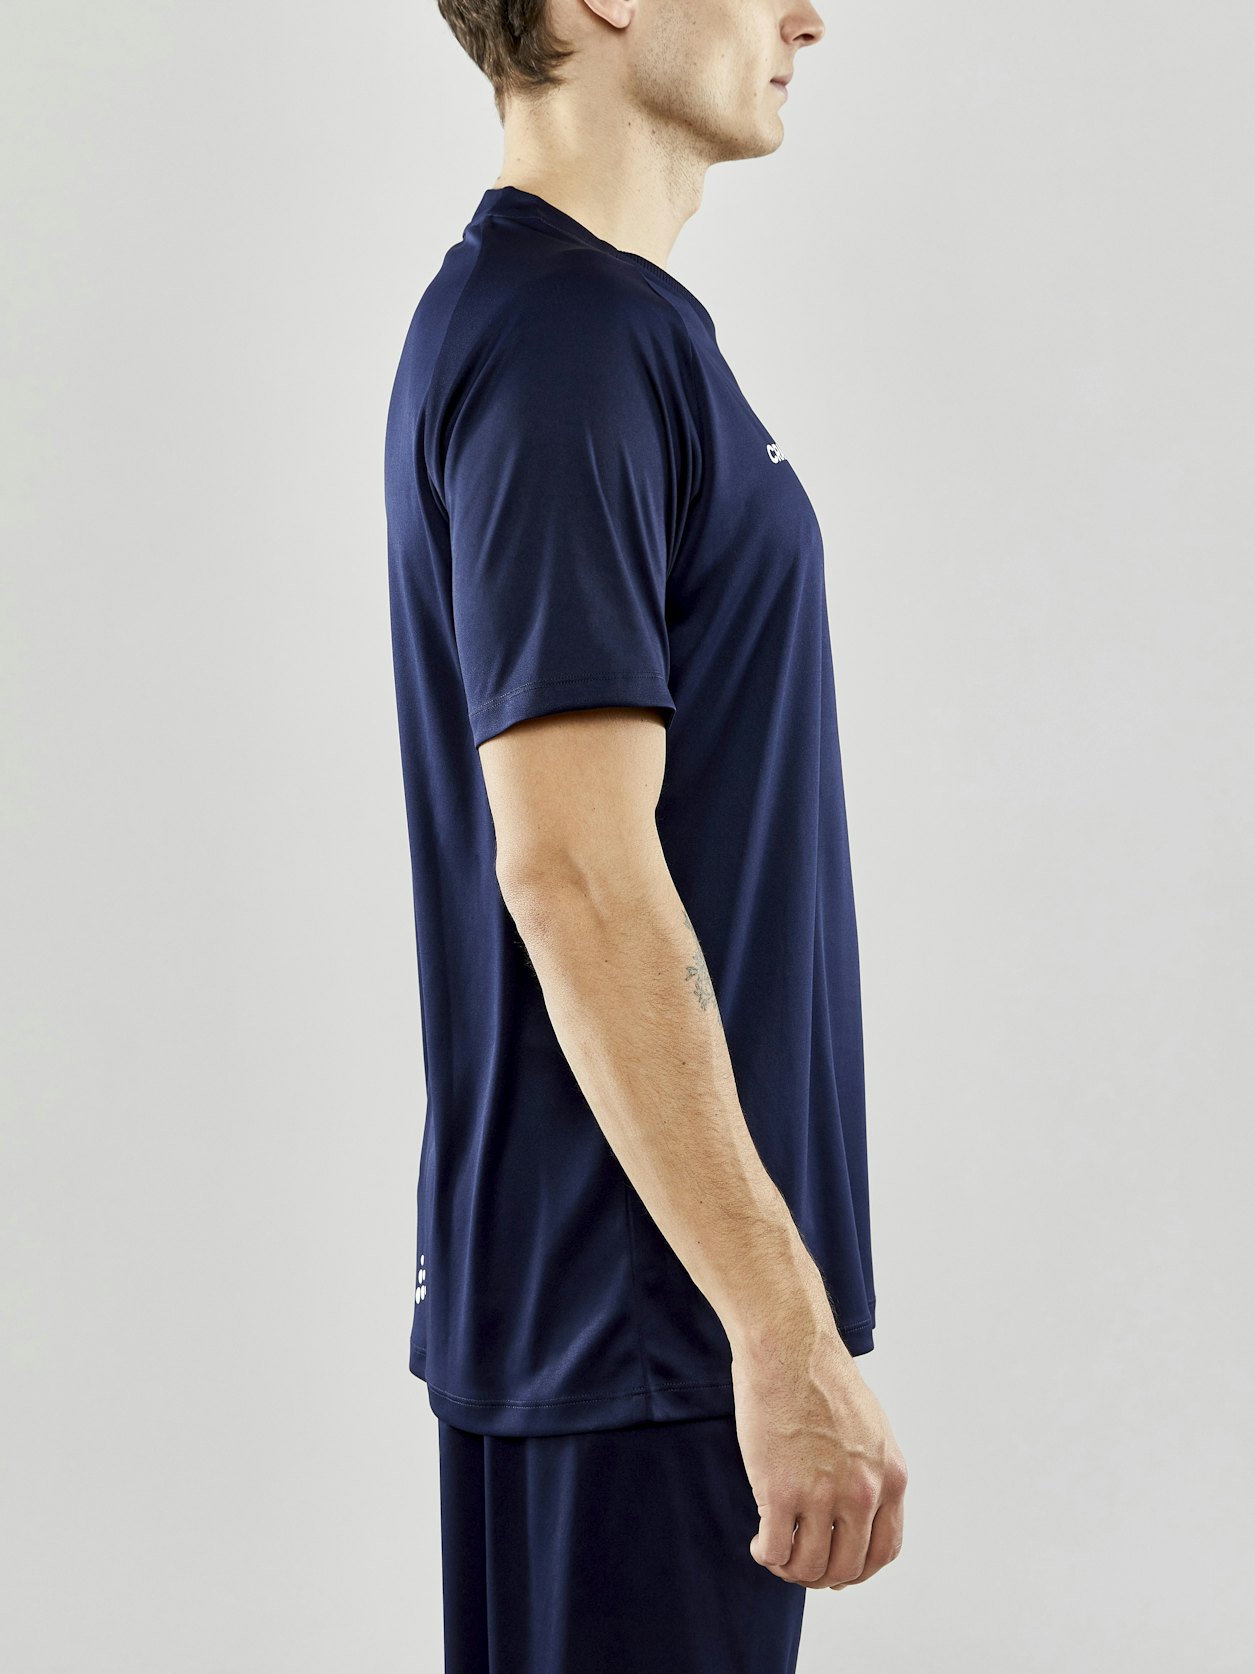 Evolve Tee M - Navy blue | Craft Sportswear